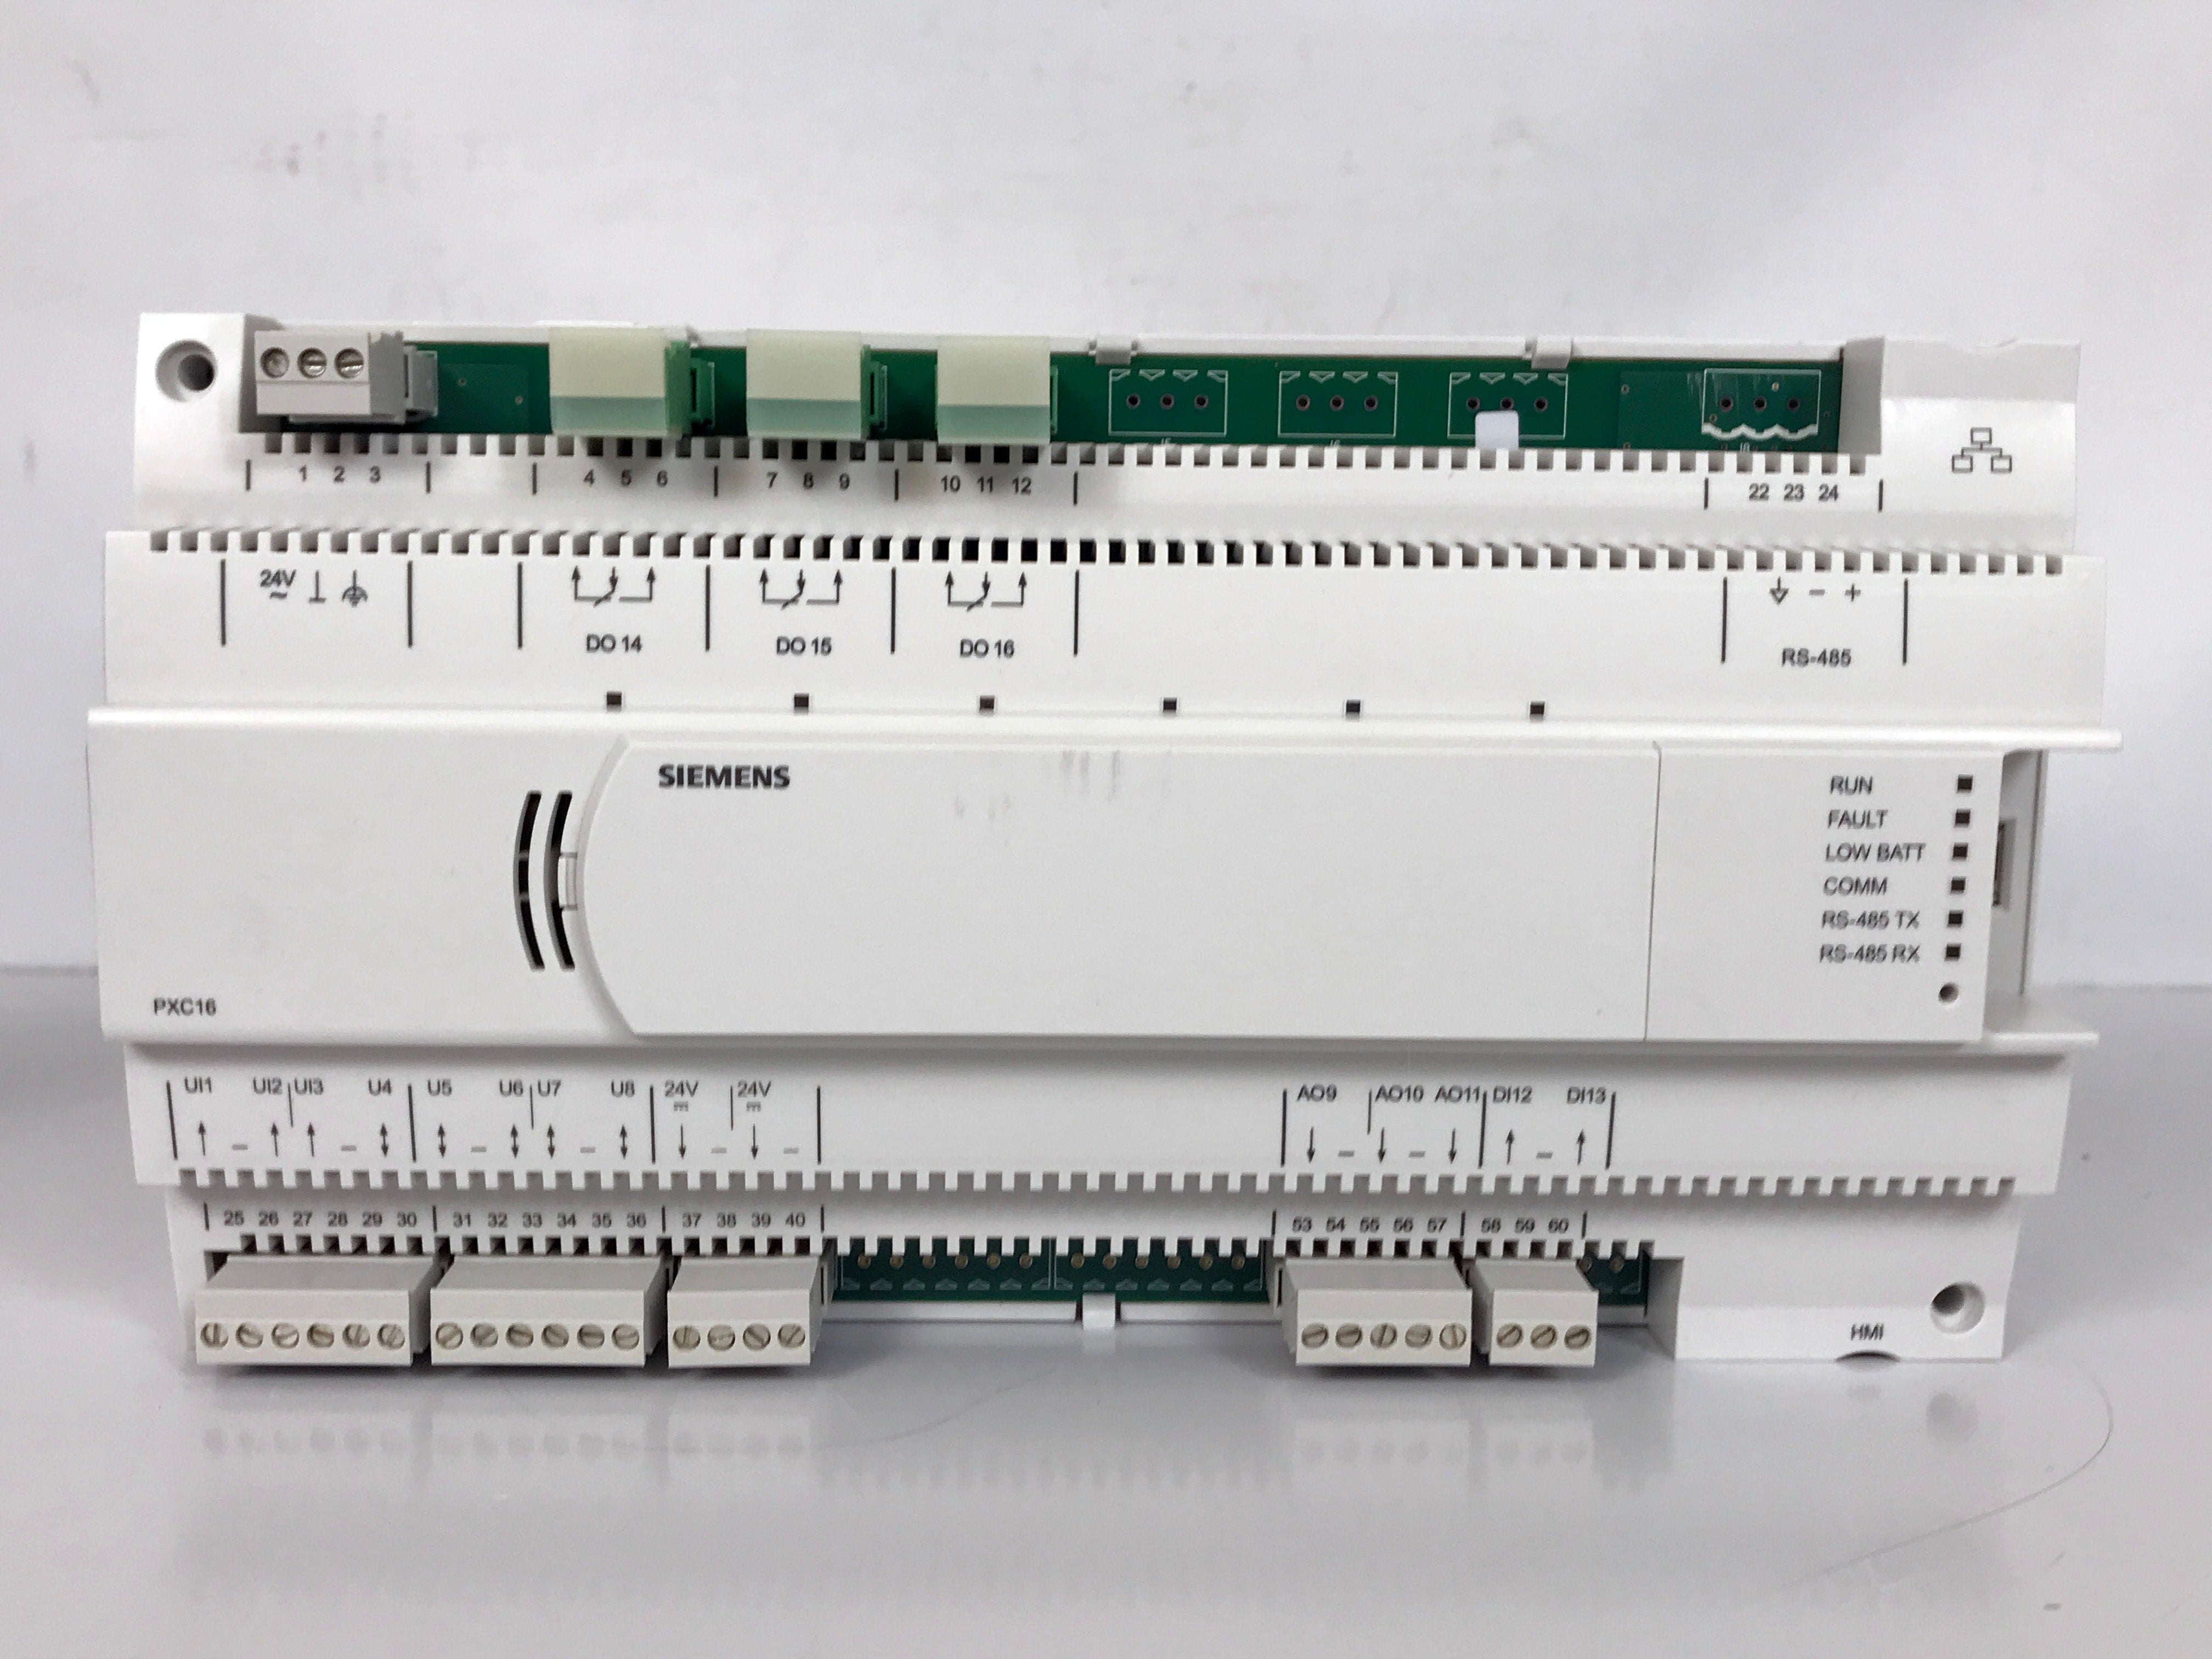 *New* Siemens Smoke Control System Equipment Controller PXC16-PE